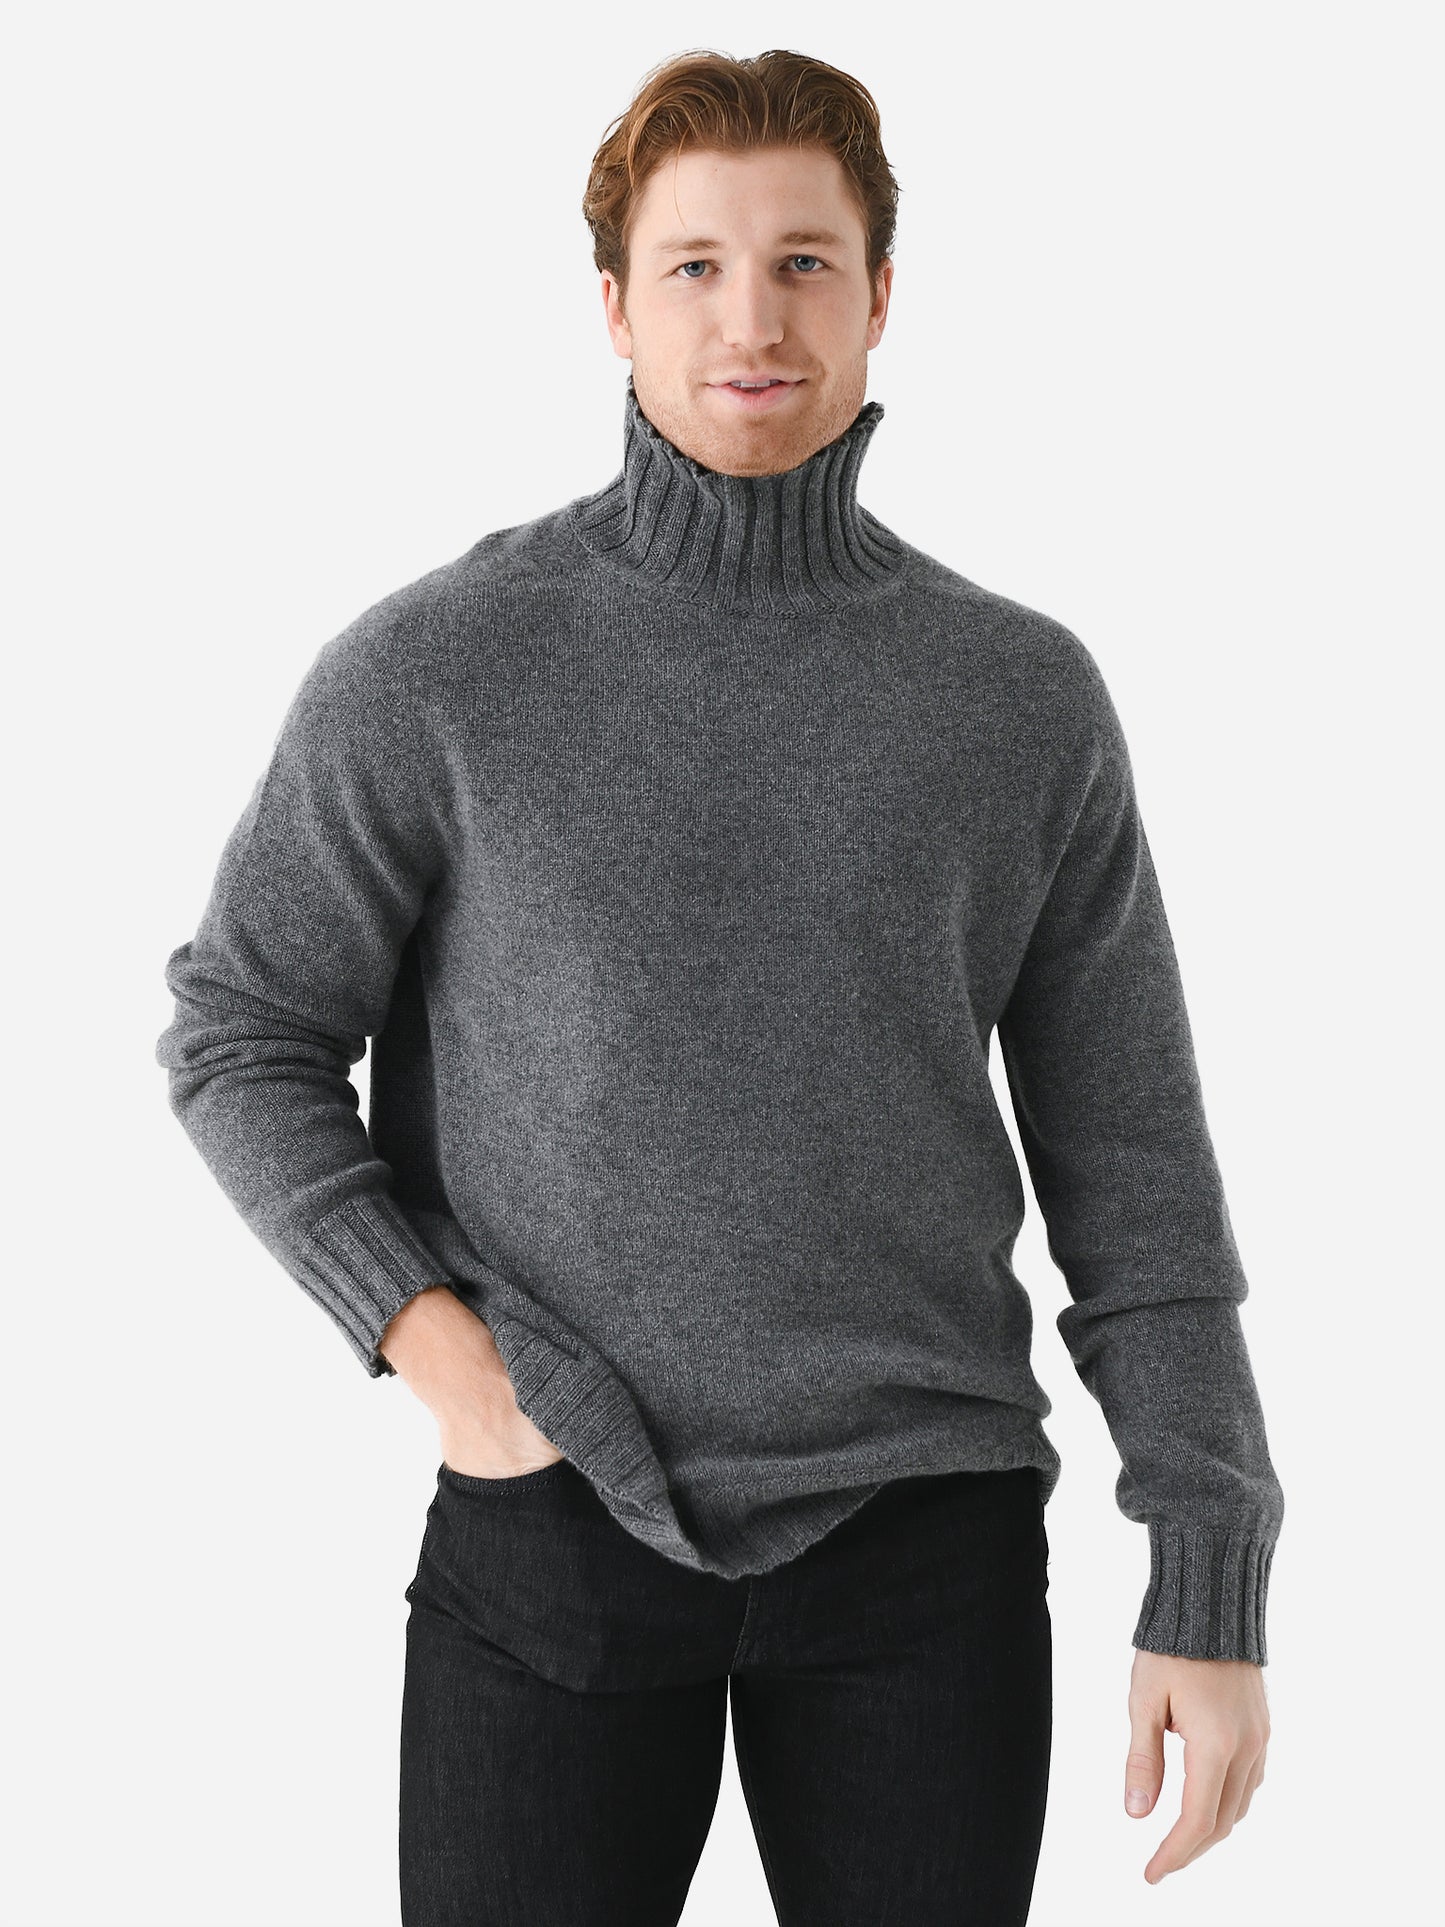 Frauenschuh Men's Aiden Sweater